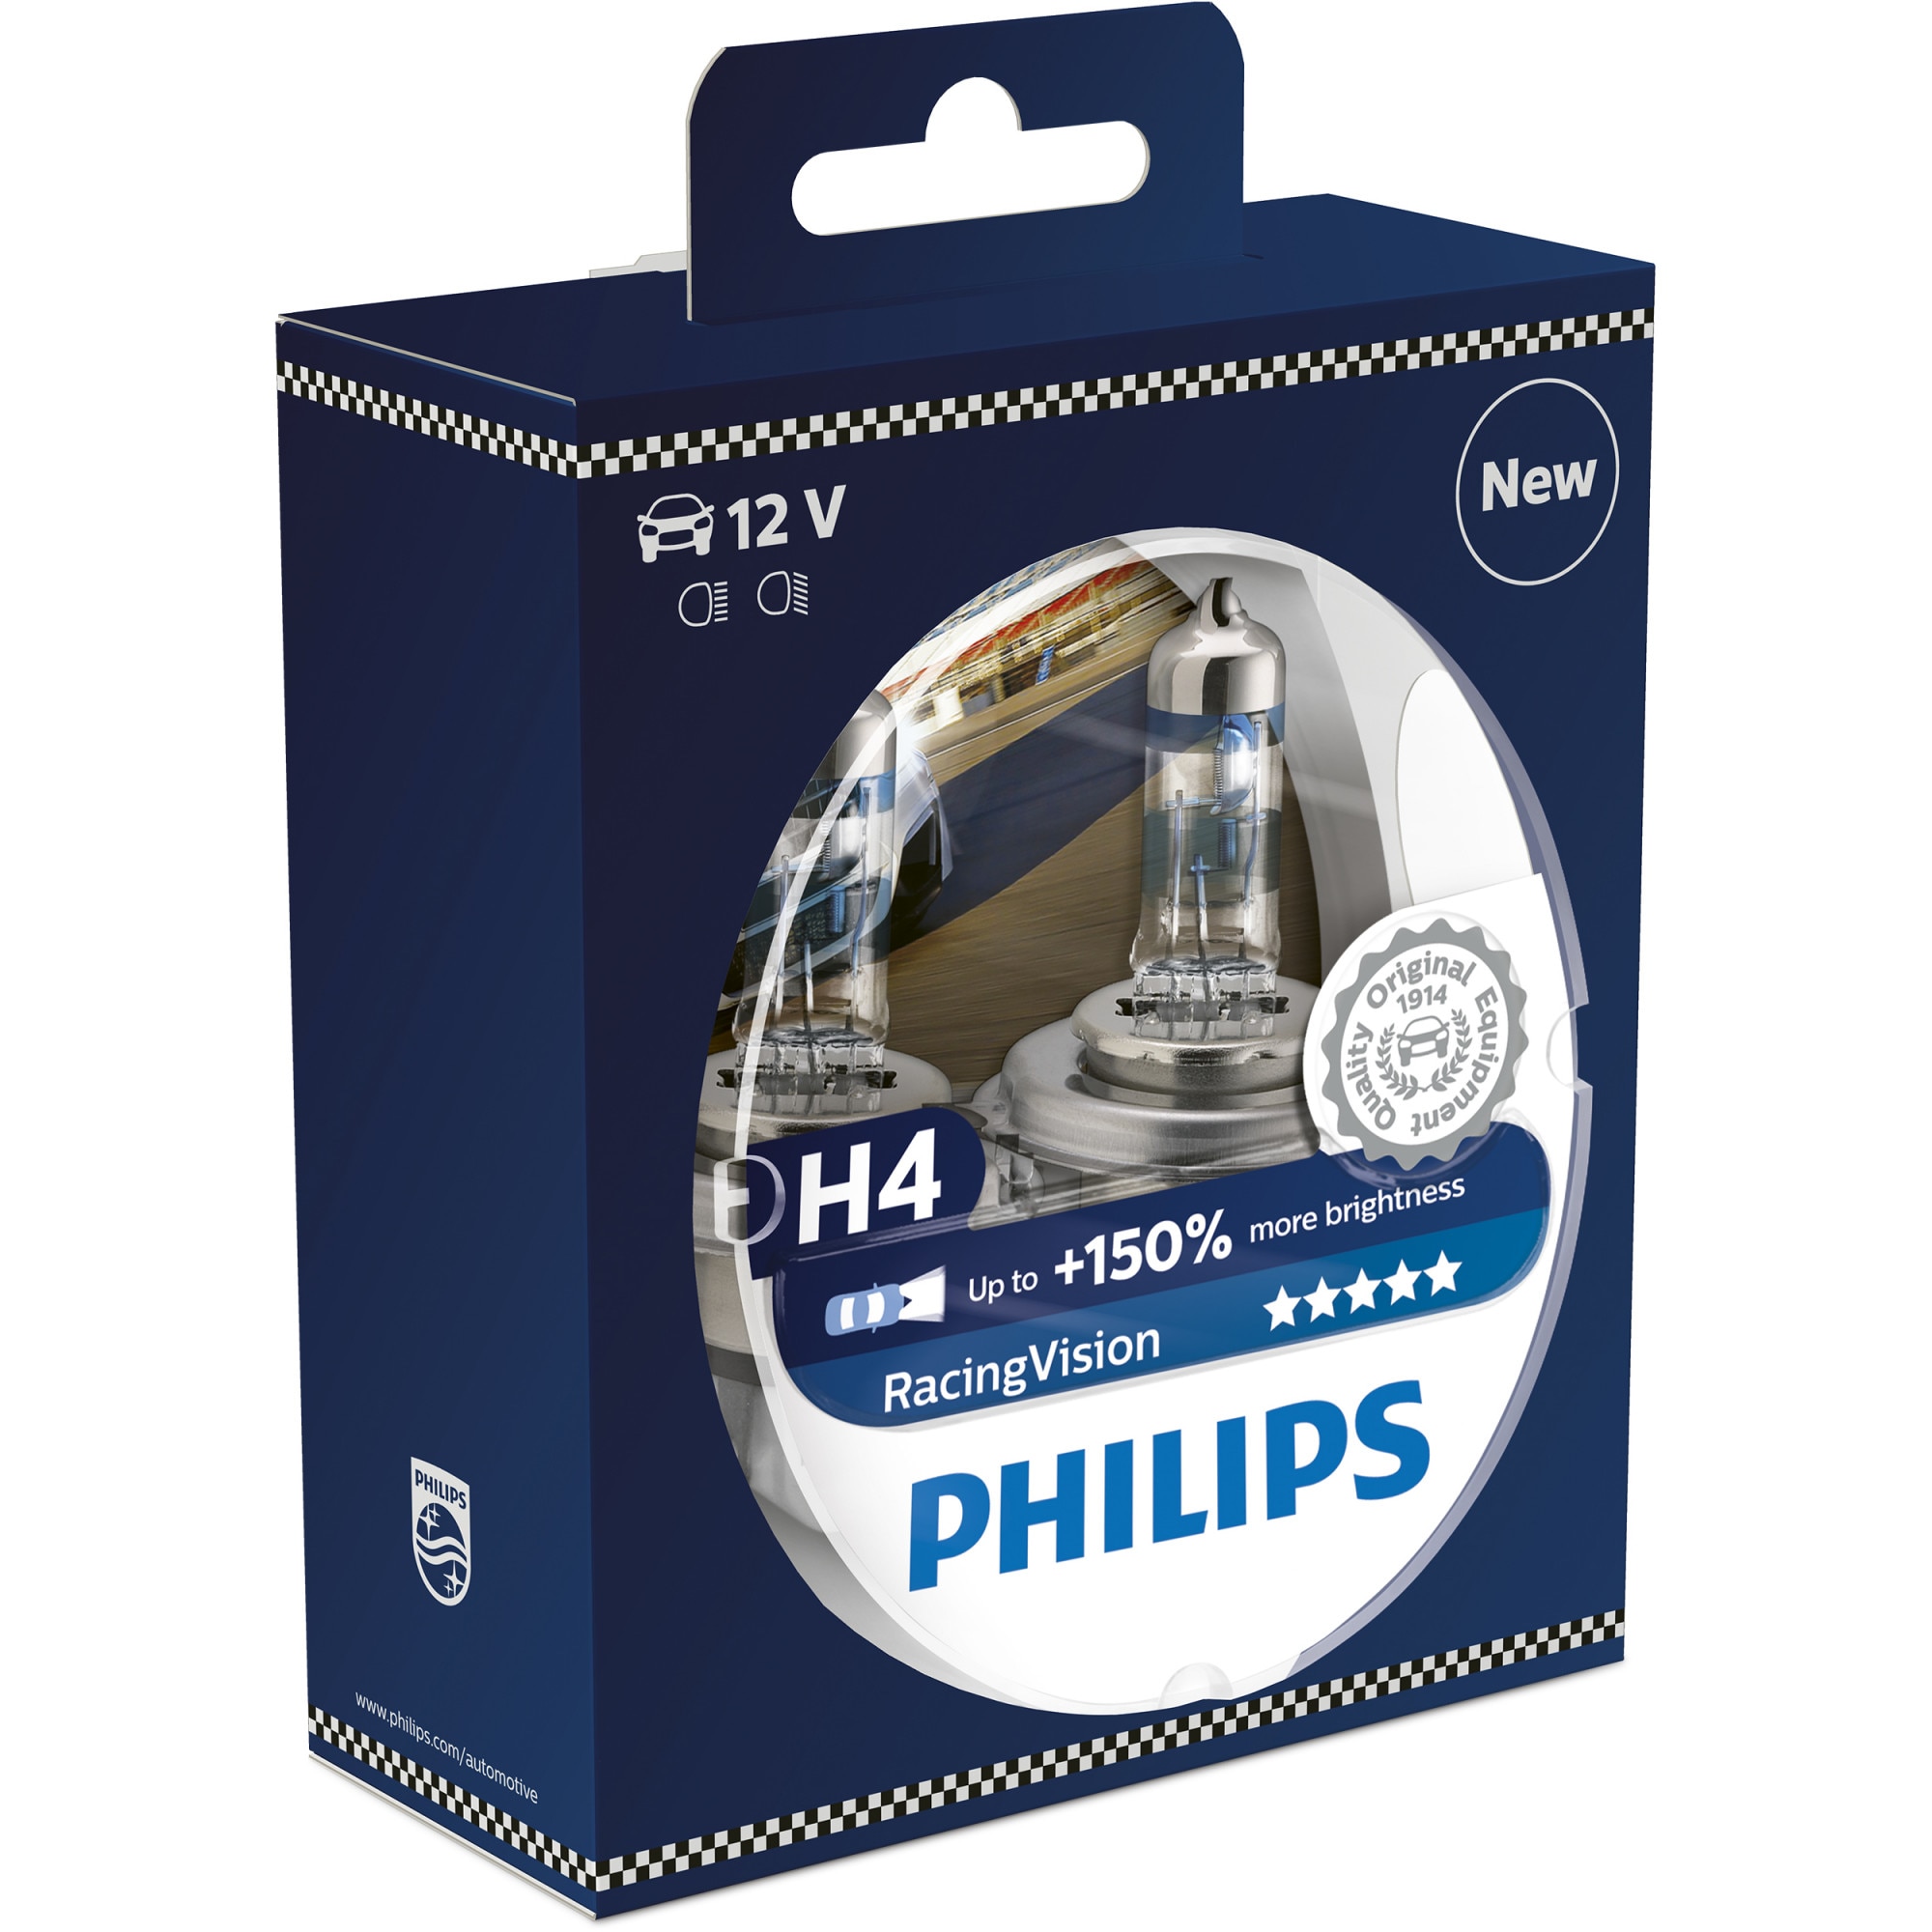 Philips h4 купить. 12972rvs2. Philips Racing Vision +150 h7. Philips Racing Vision +150% h4 (p43t) 12v 60/55w. Галогенная лампа Philips h4 +150.